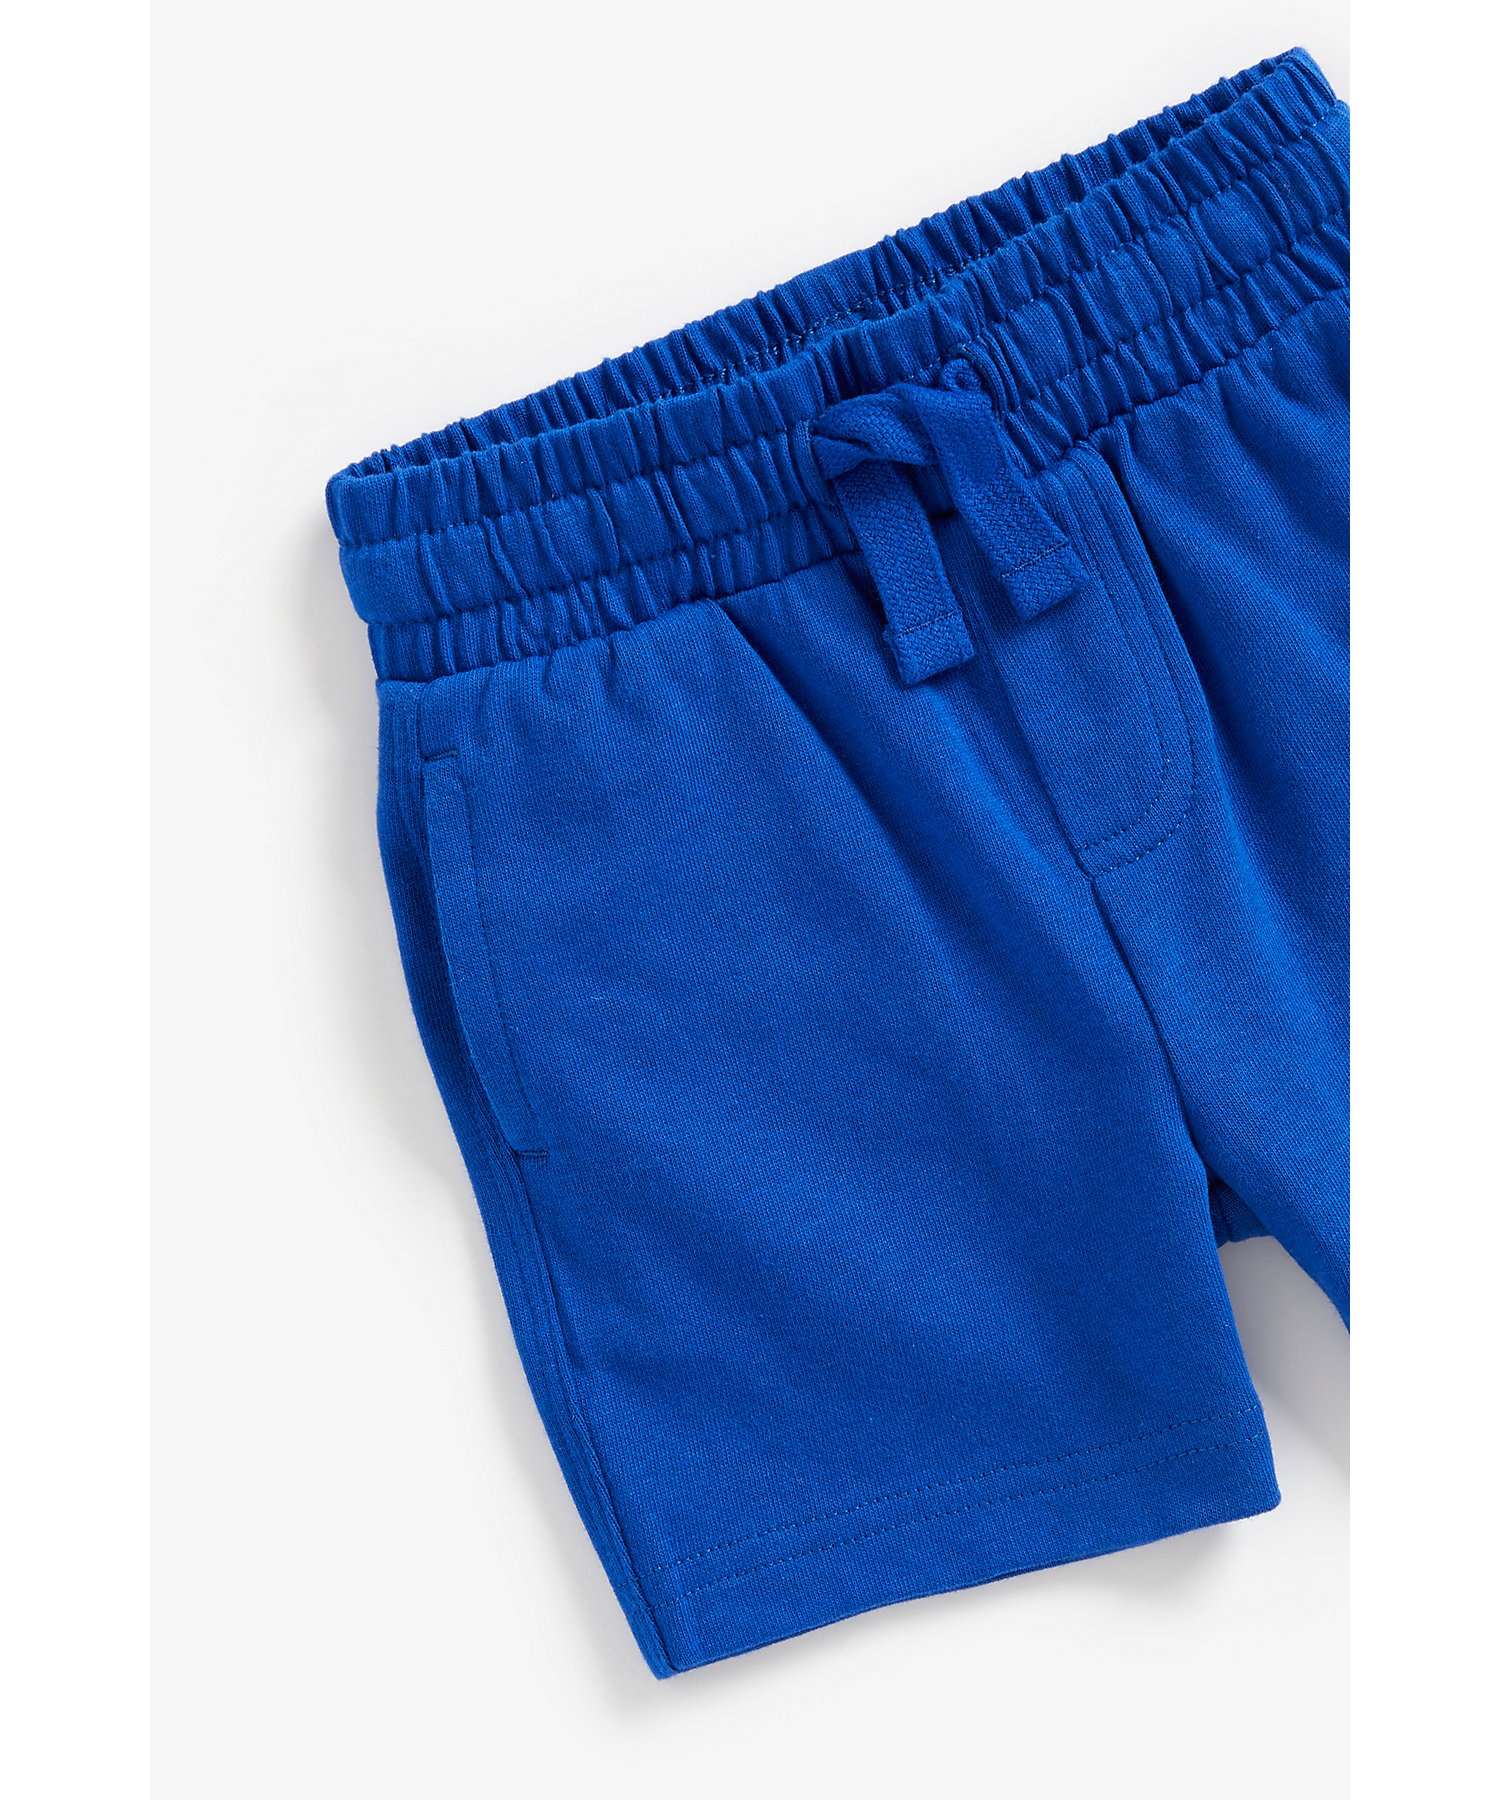 Boys Shorts Side Pocket-Blue